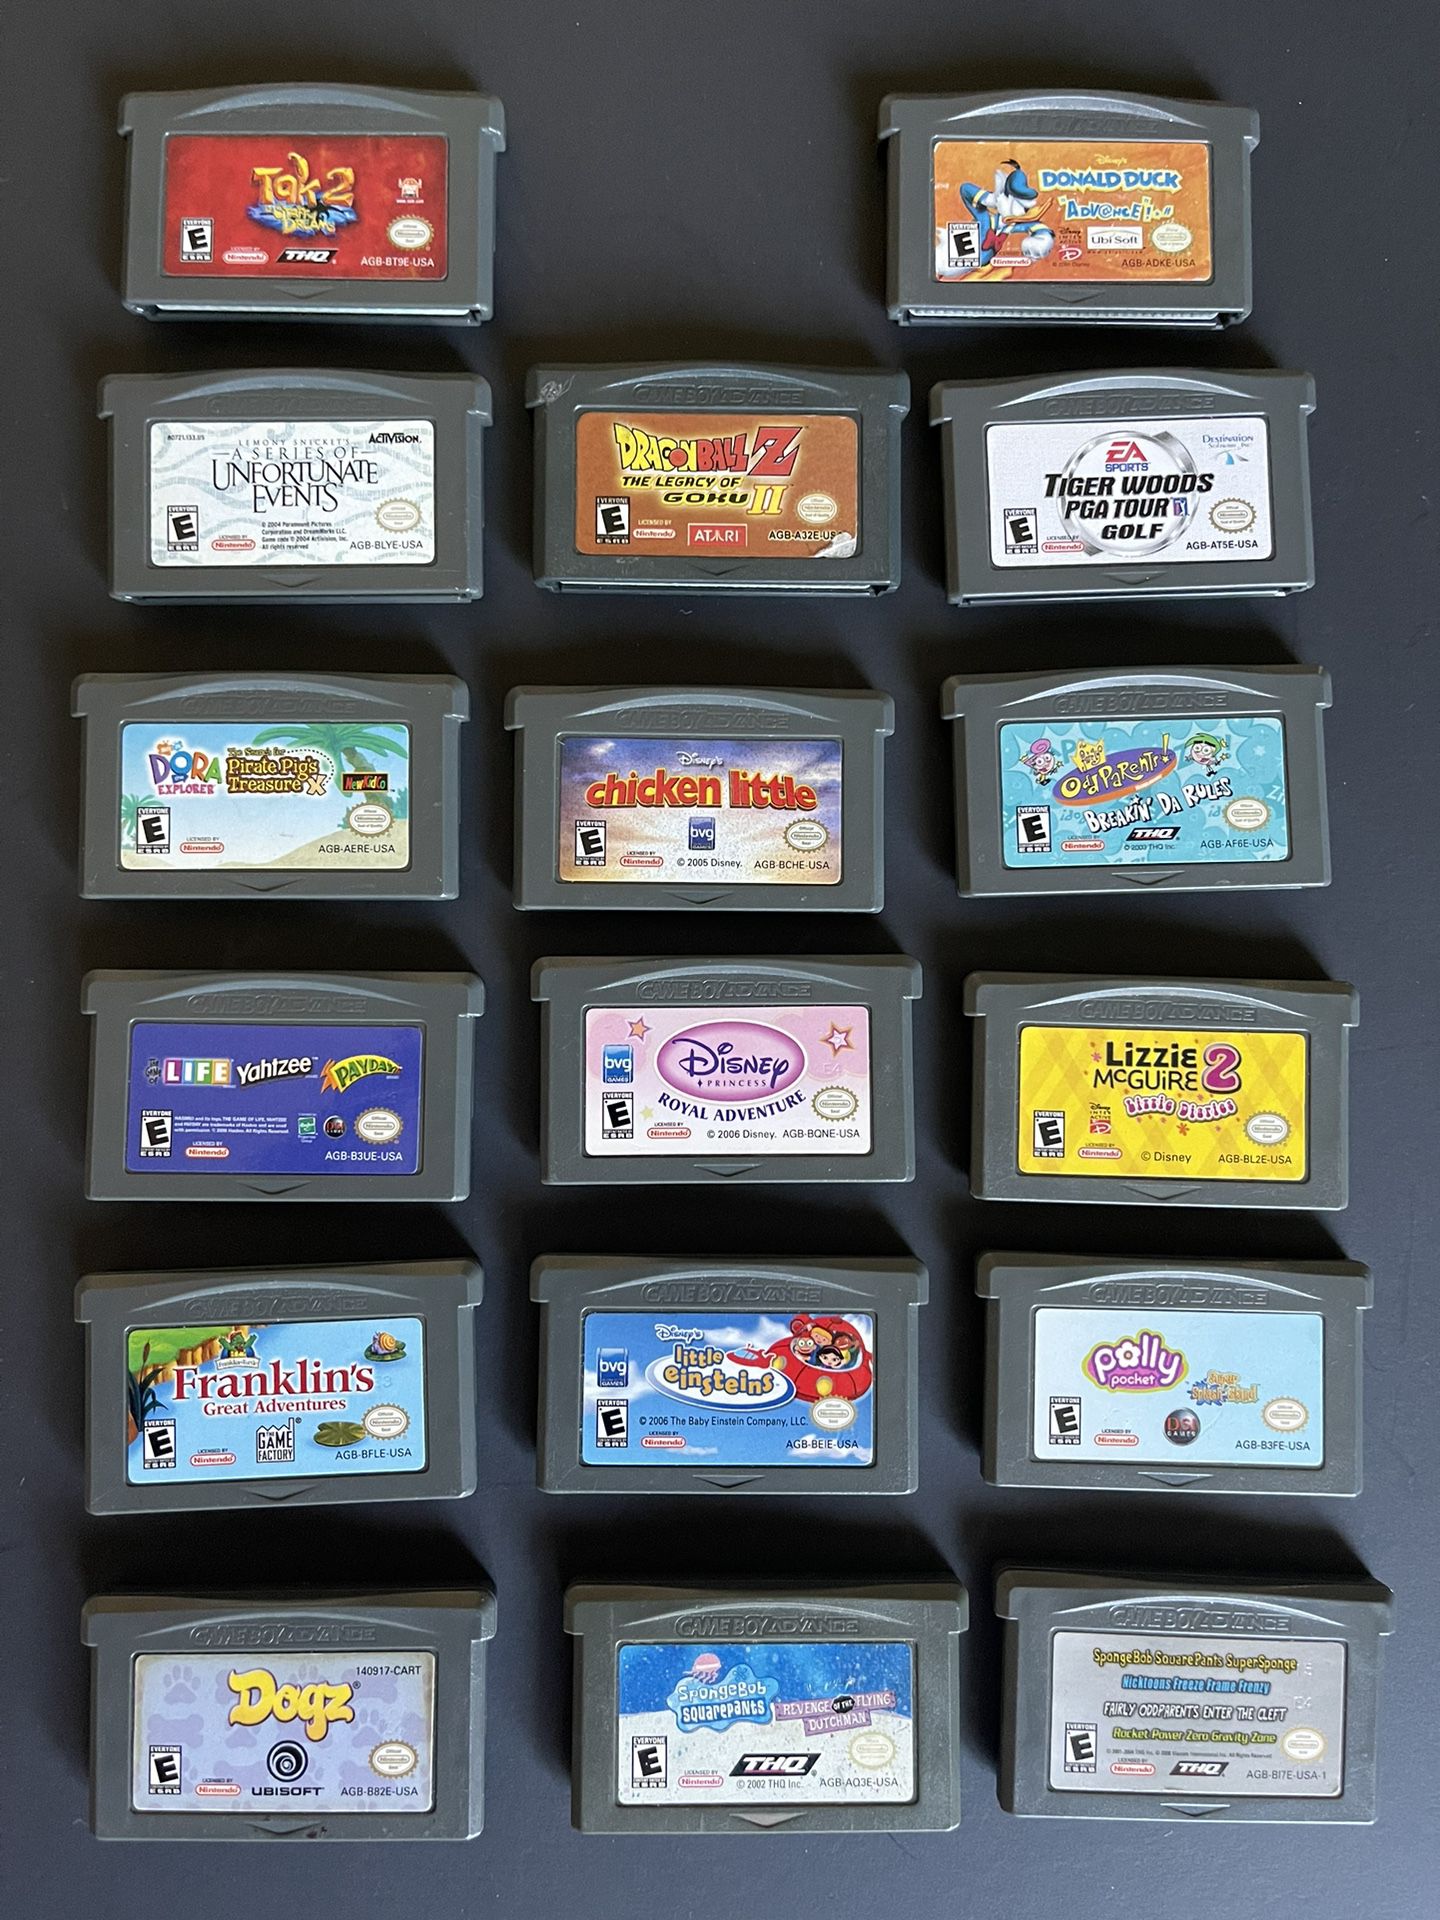 Nintendo Gameboy Advance Games